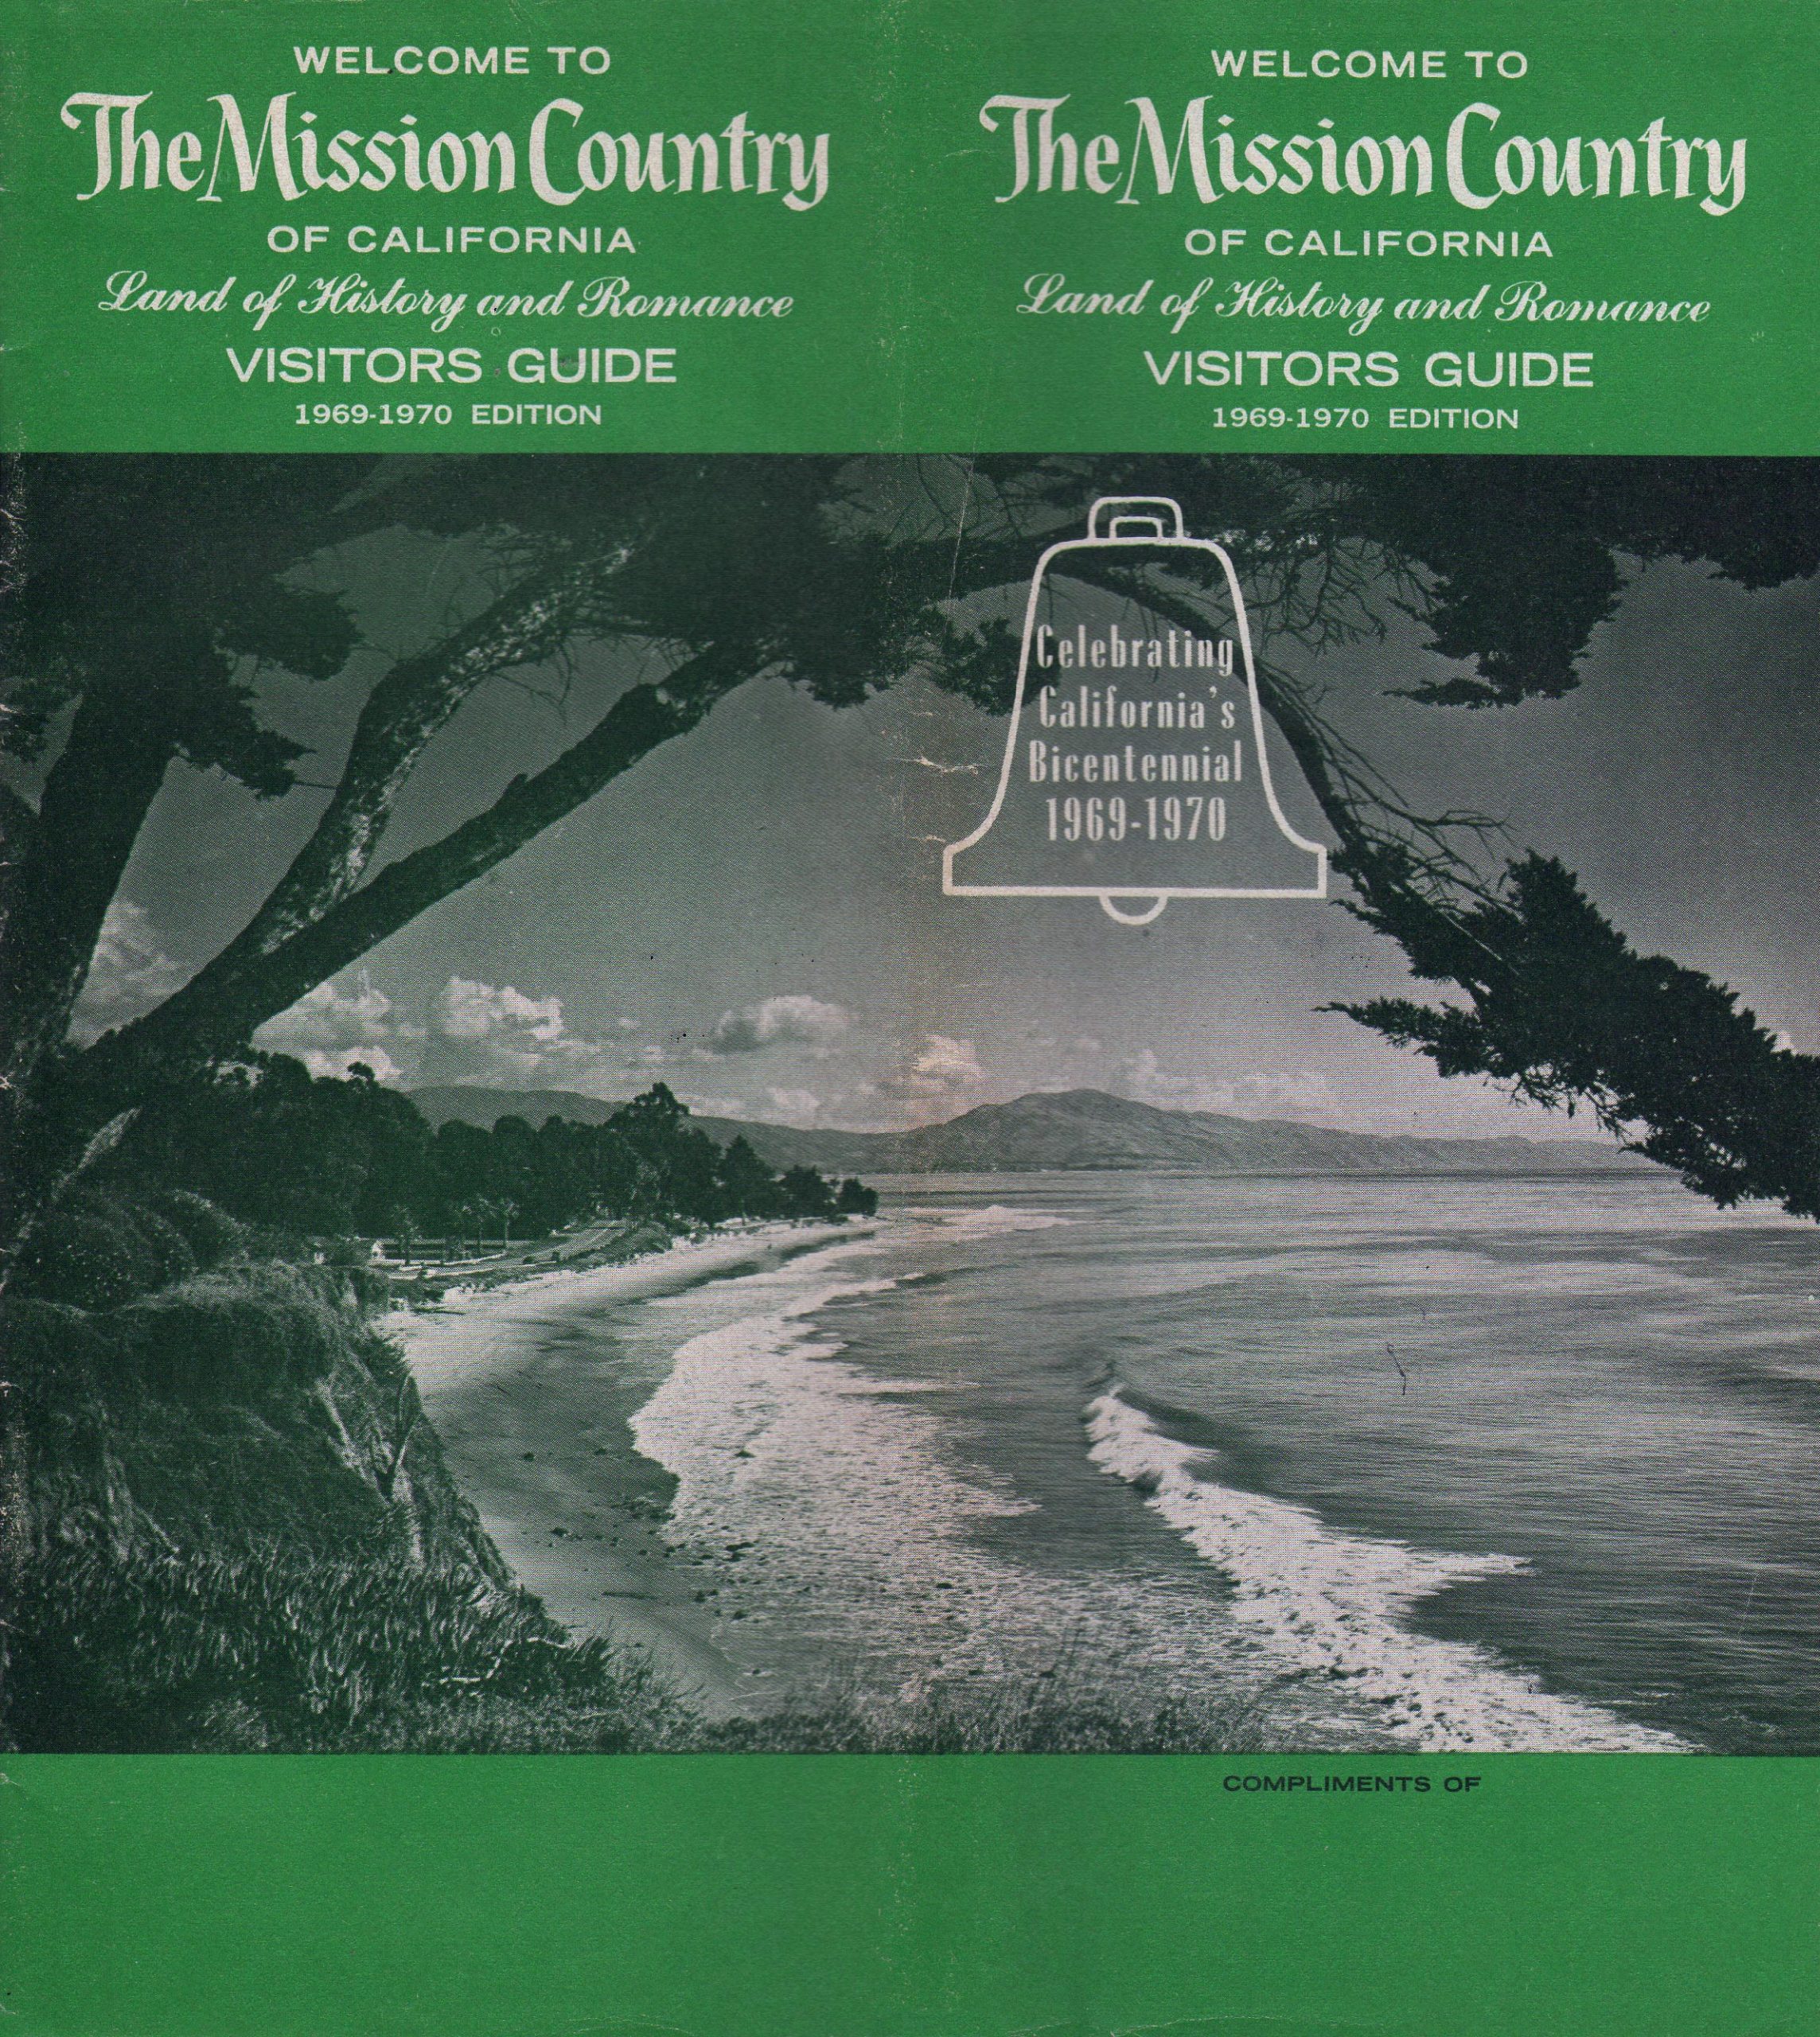 Mission Trails Visitors Guide 1969-1970